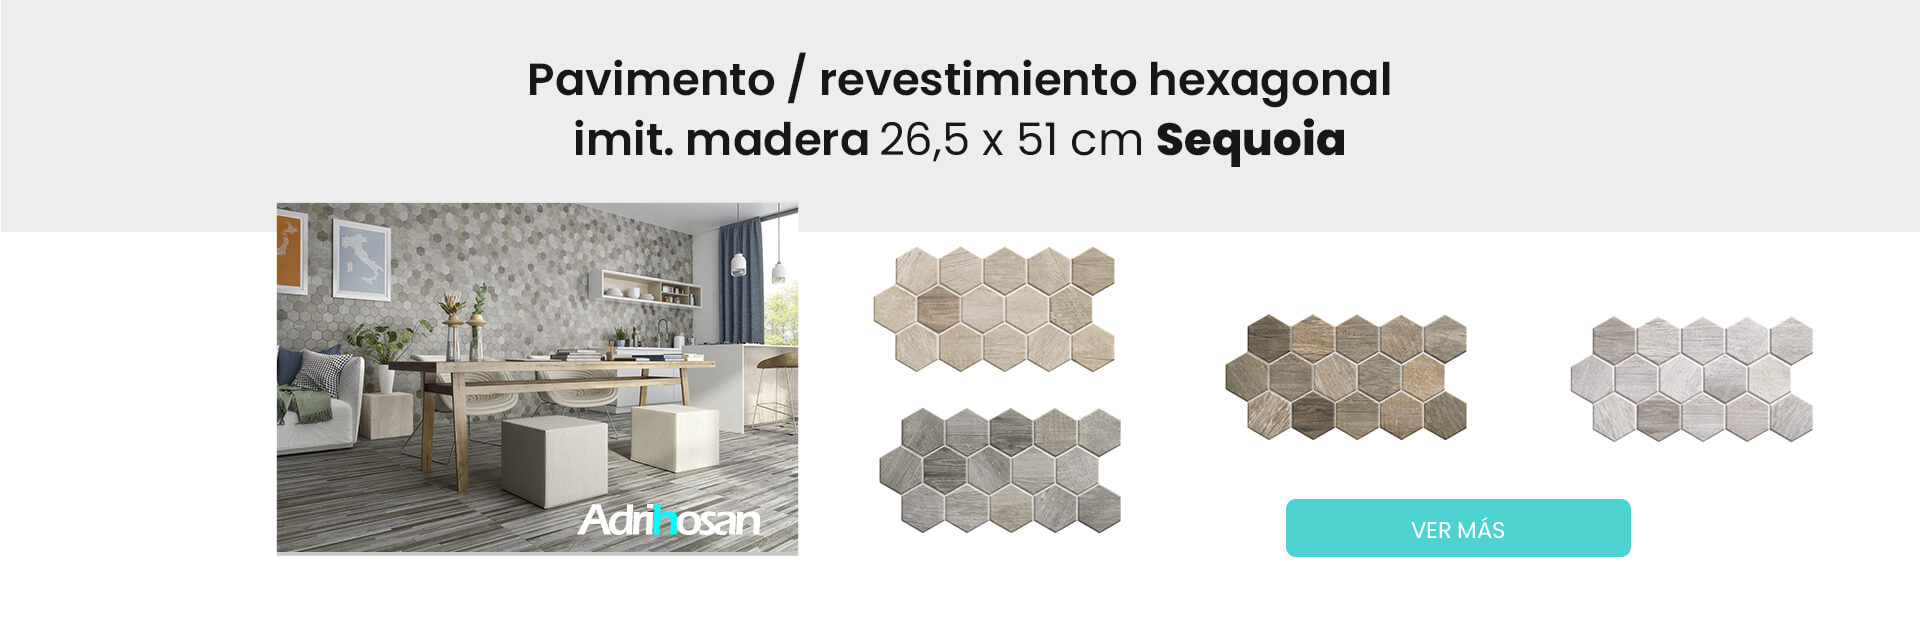 Pavimento o revestimiento porcelánico sequoia hexagonal 26,5x51 cm adrihosan 